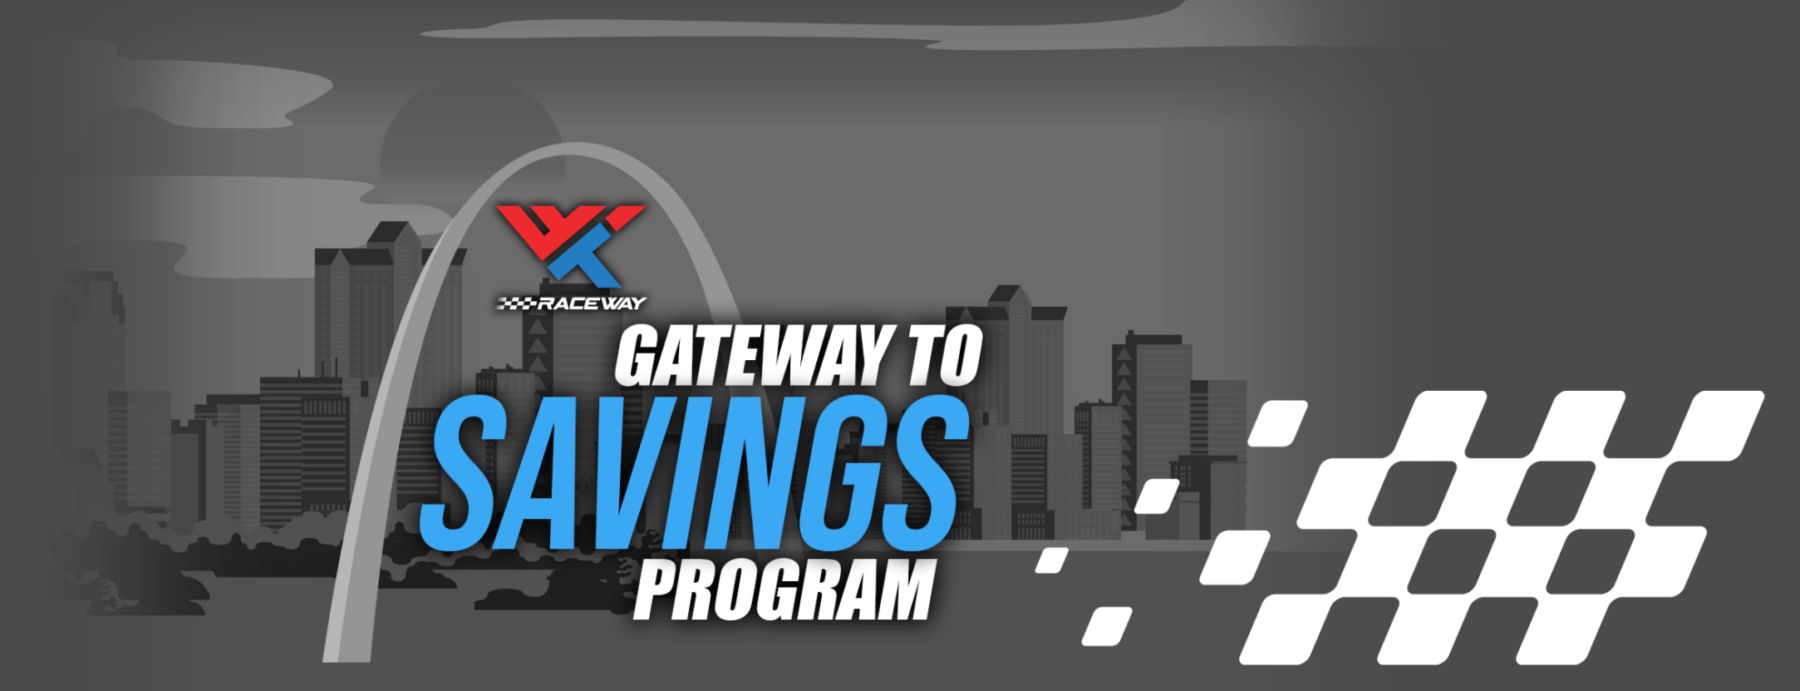 Gateway To Savings Program